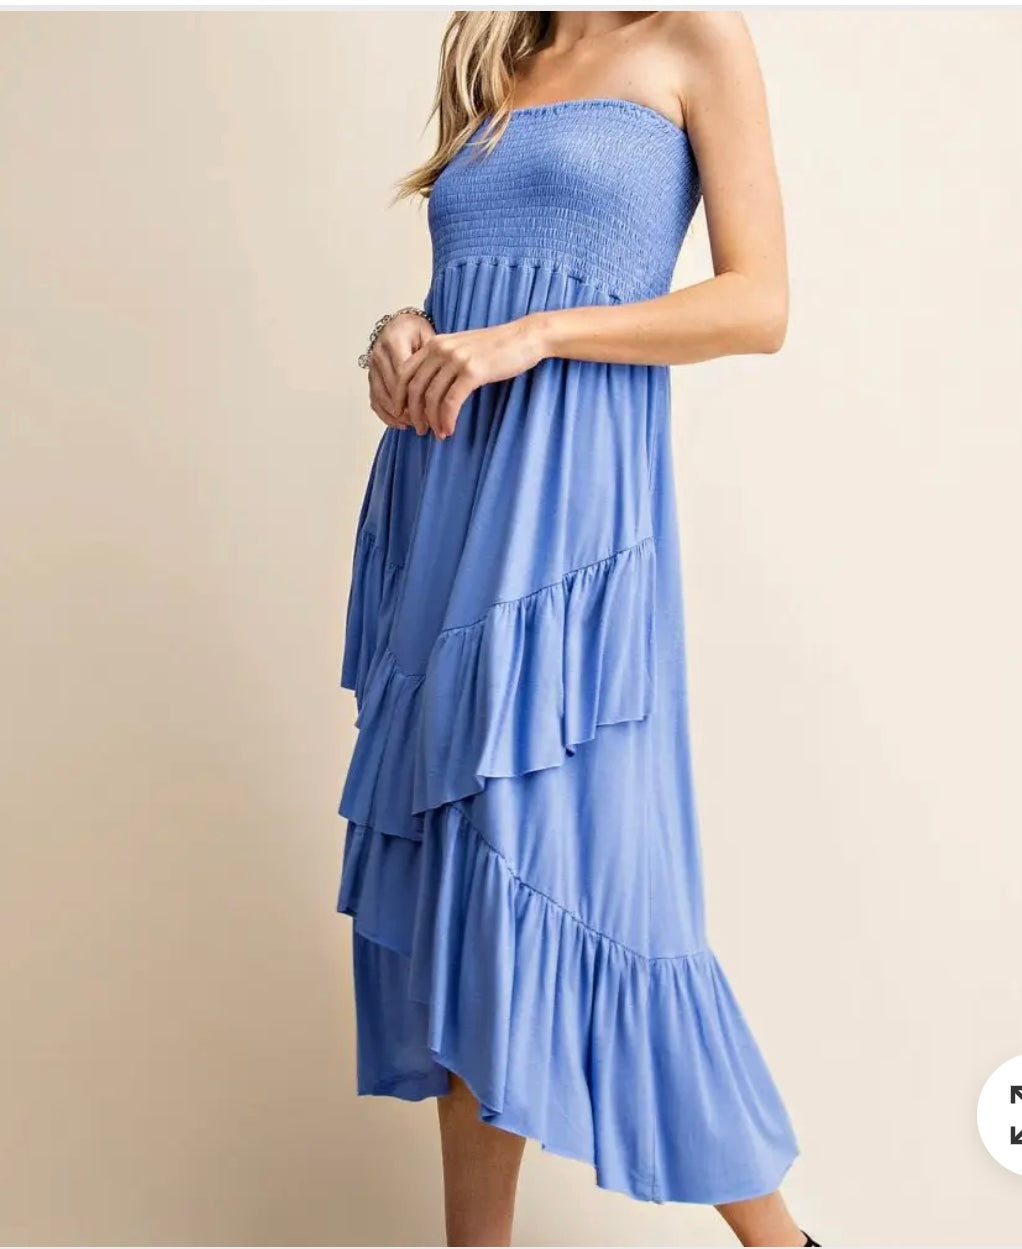 Blue Lavender Dress